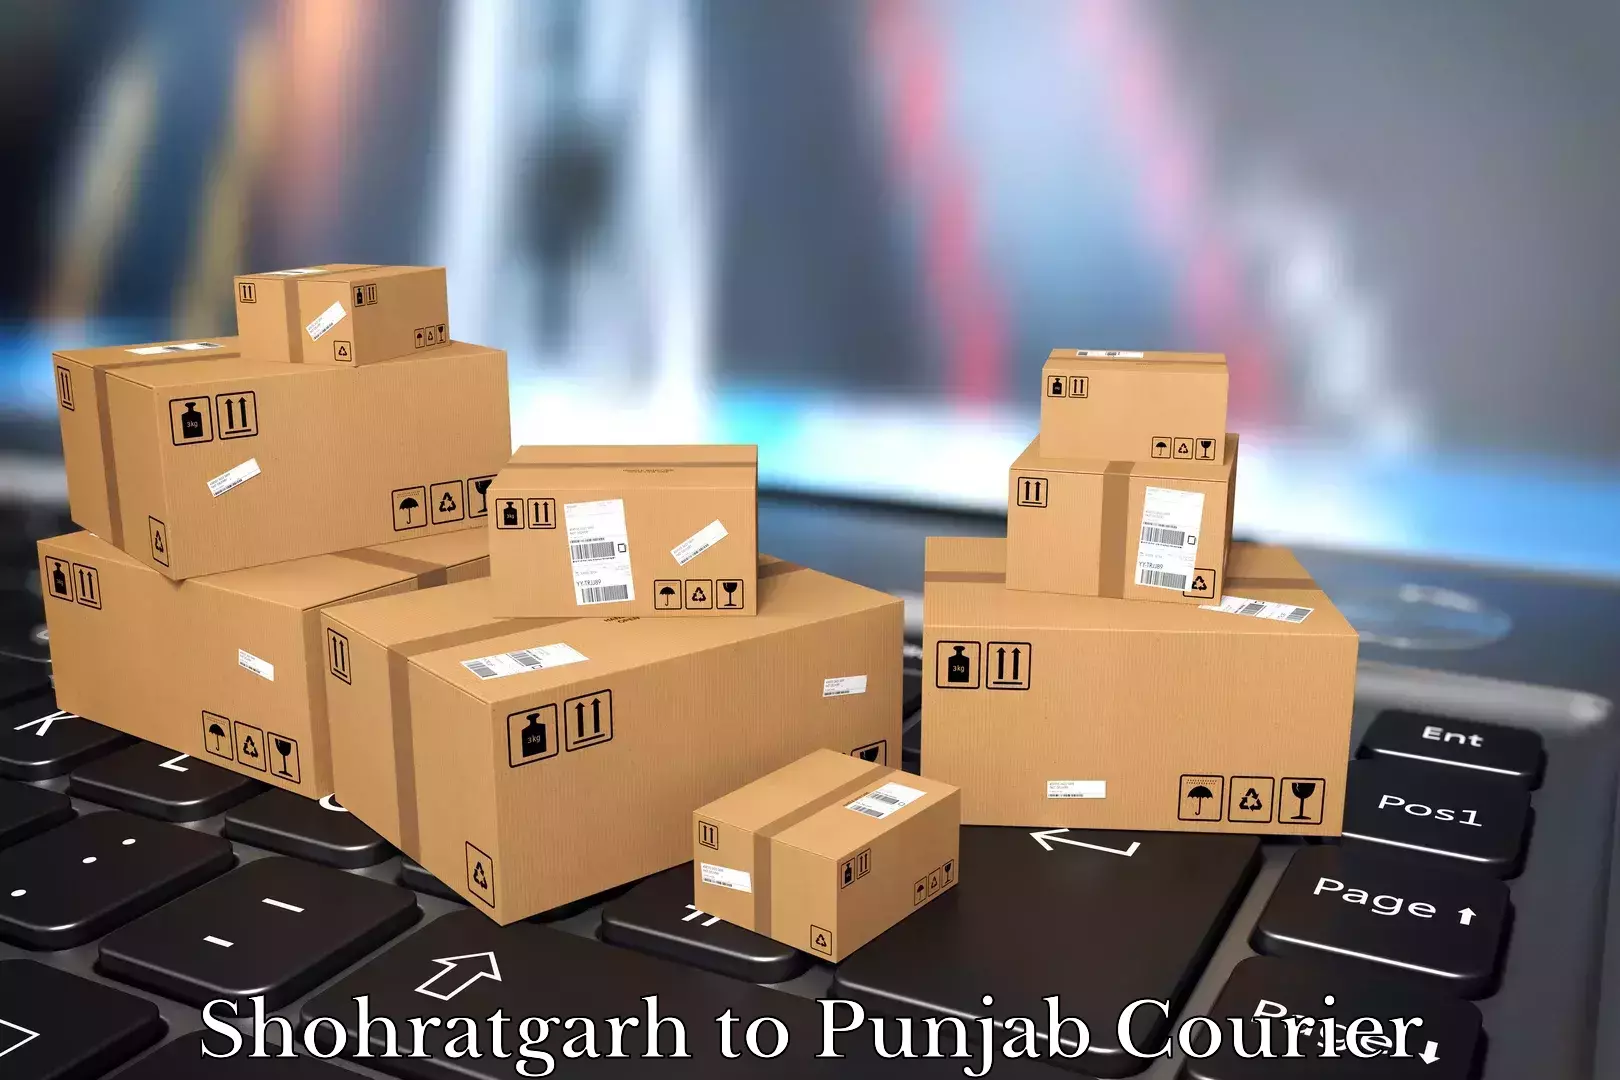 Furniture moving experts Shohratgarh to Jalandhar